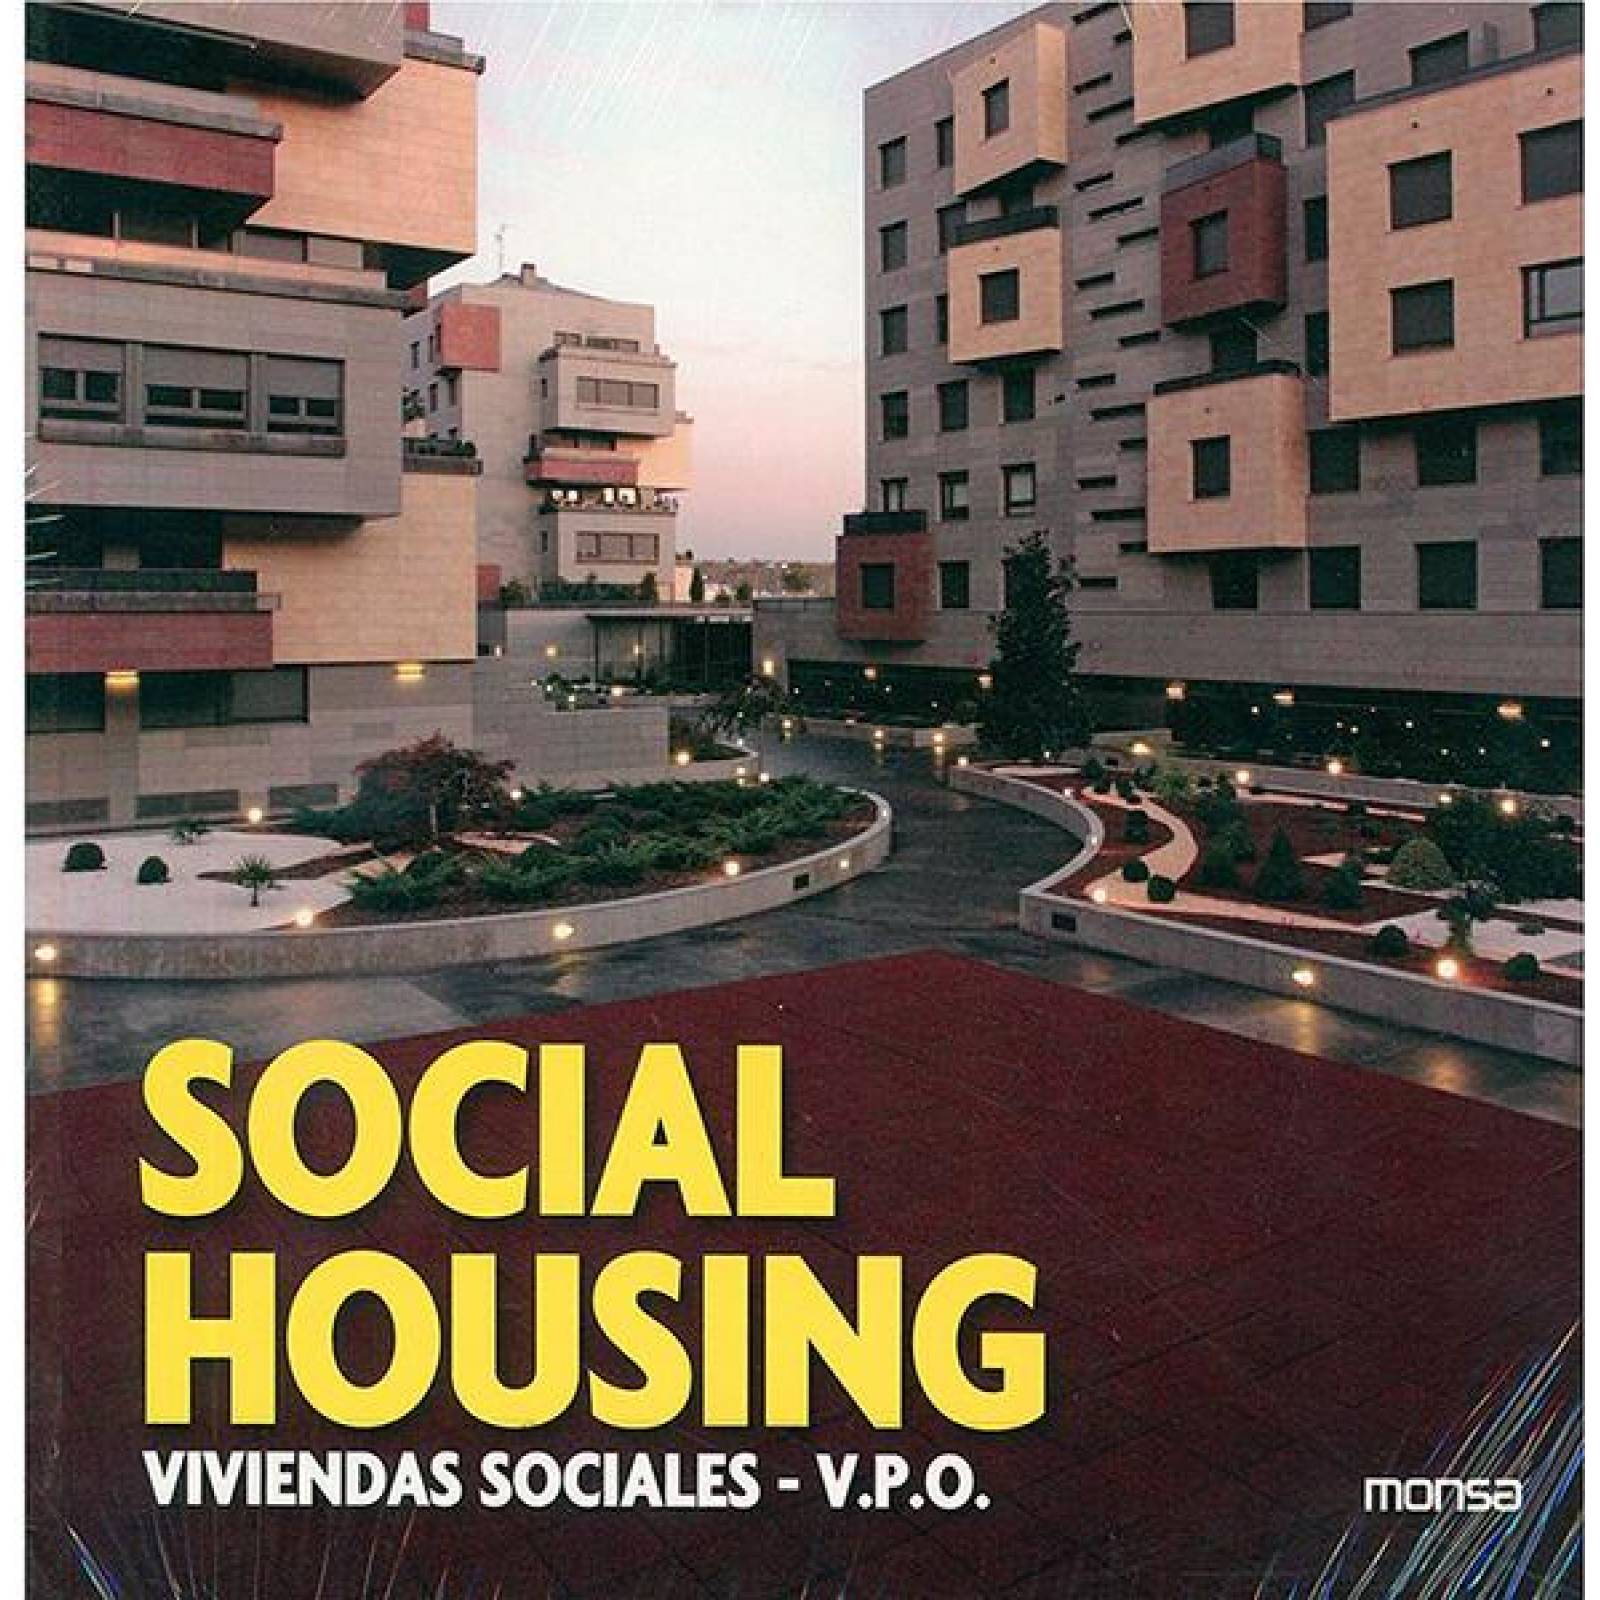 Social housing - viviendas sociales v.p.o. 